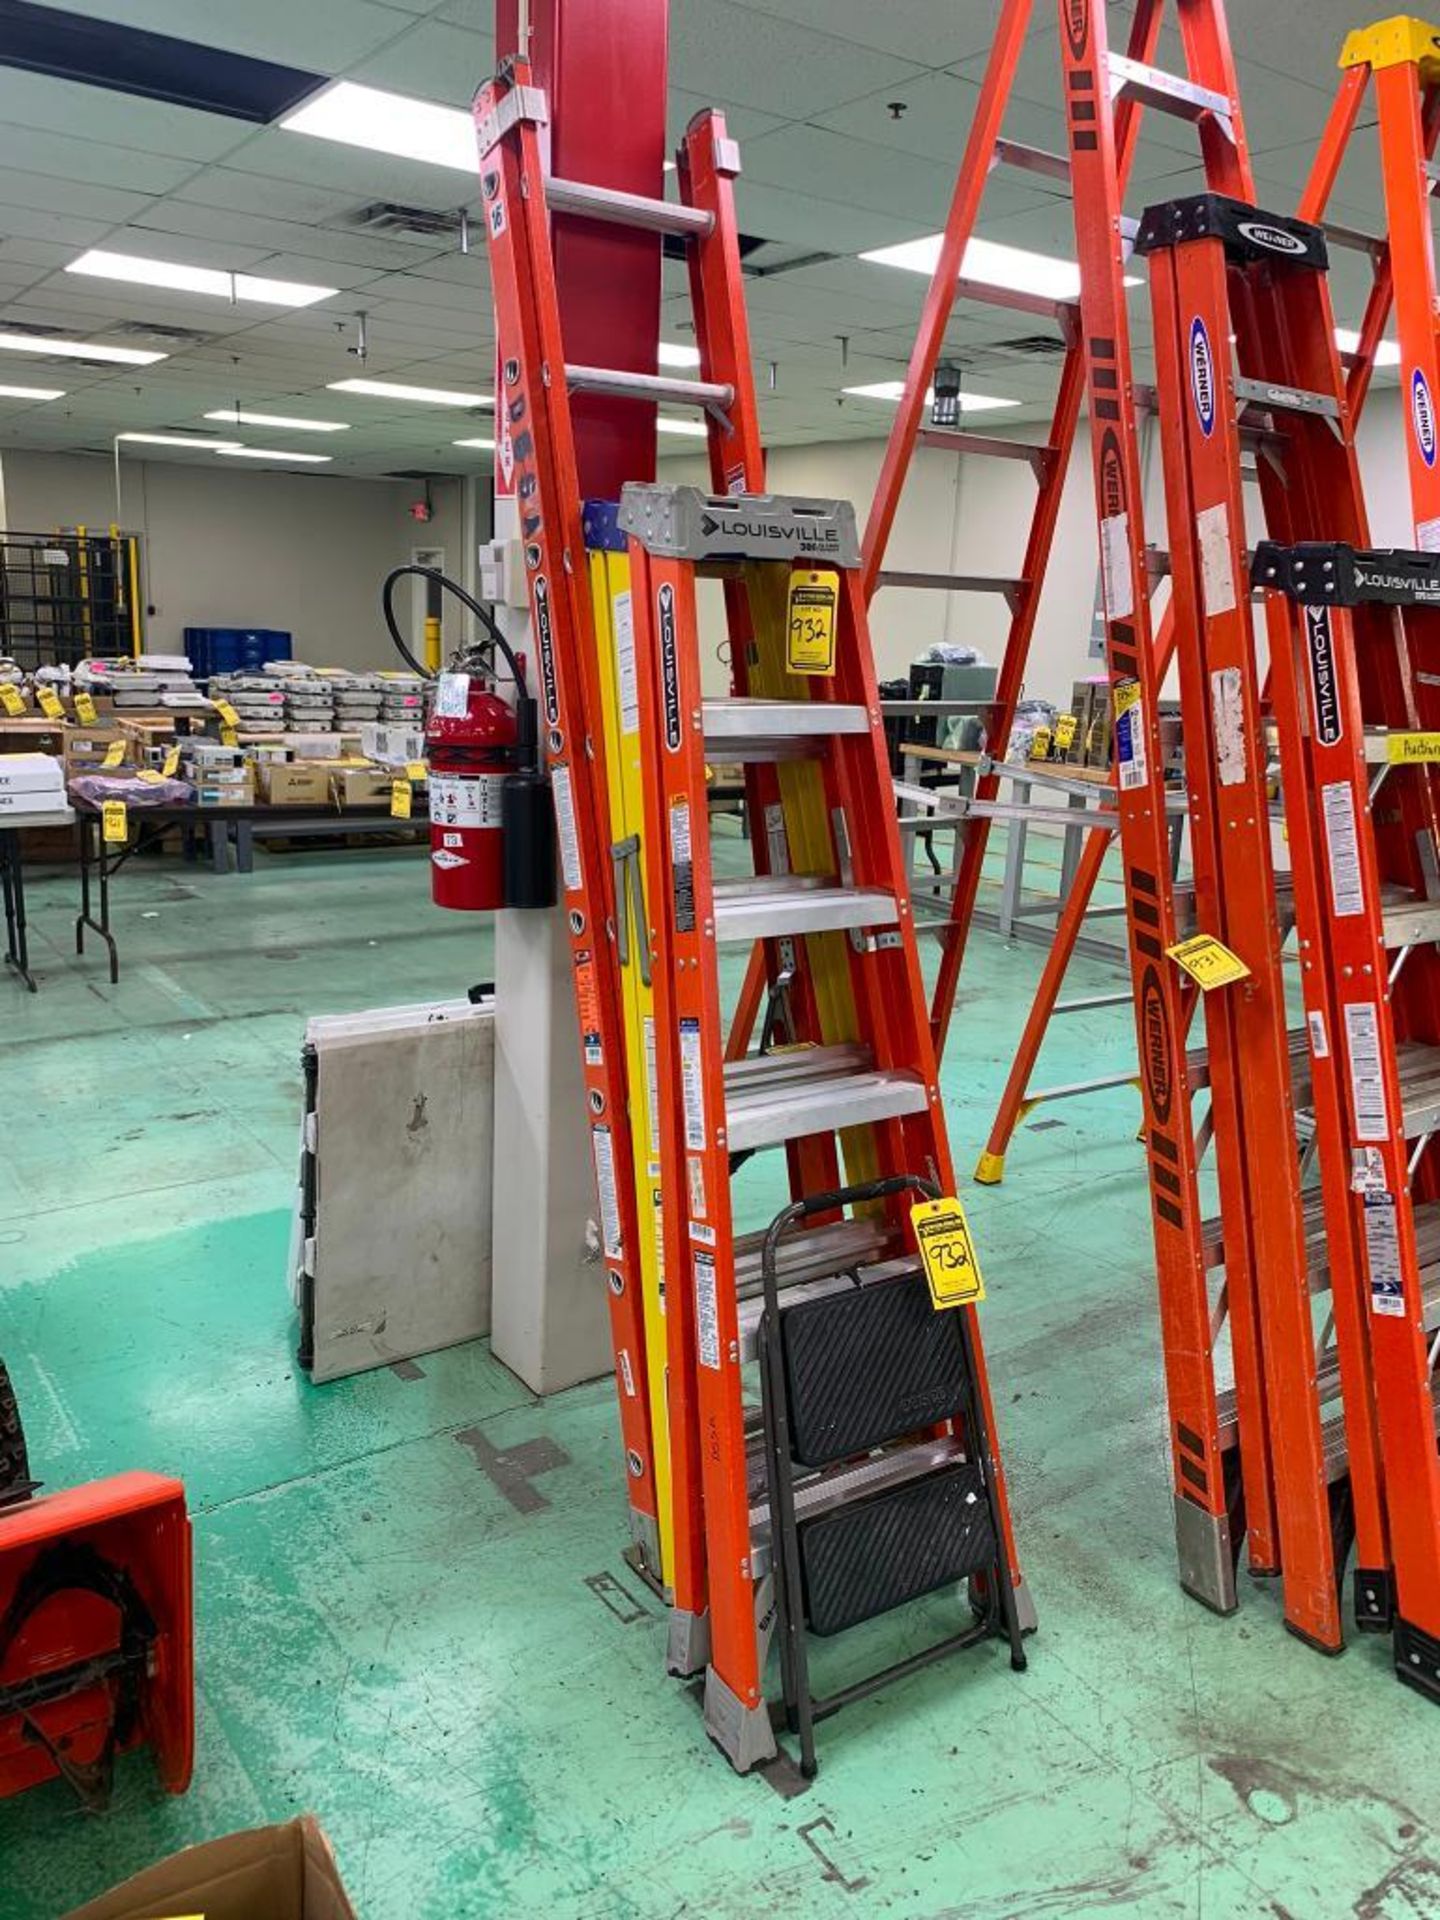 Assorted Ladders; 16' Extension Ladder, 6' Fiberglass Step Ladders, & Cosco Step Stool